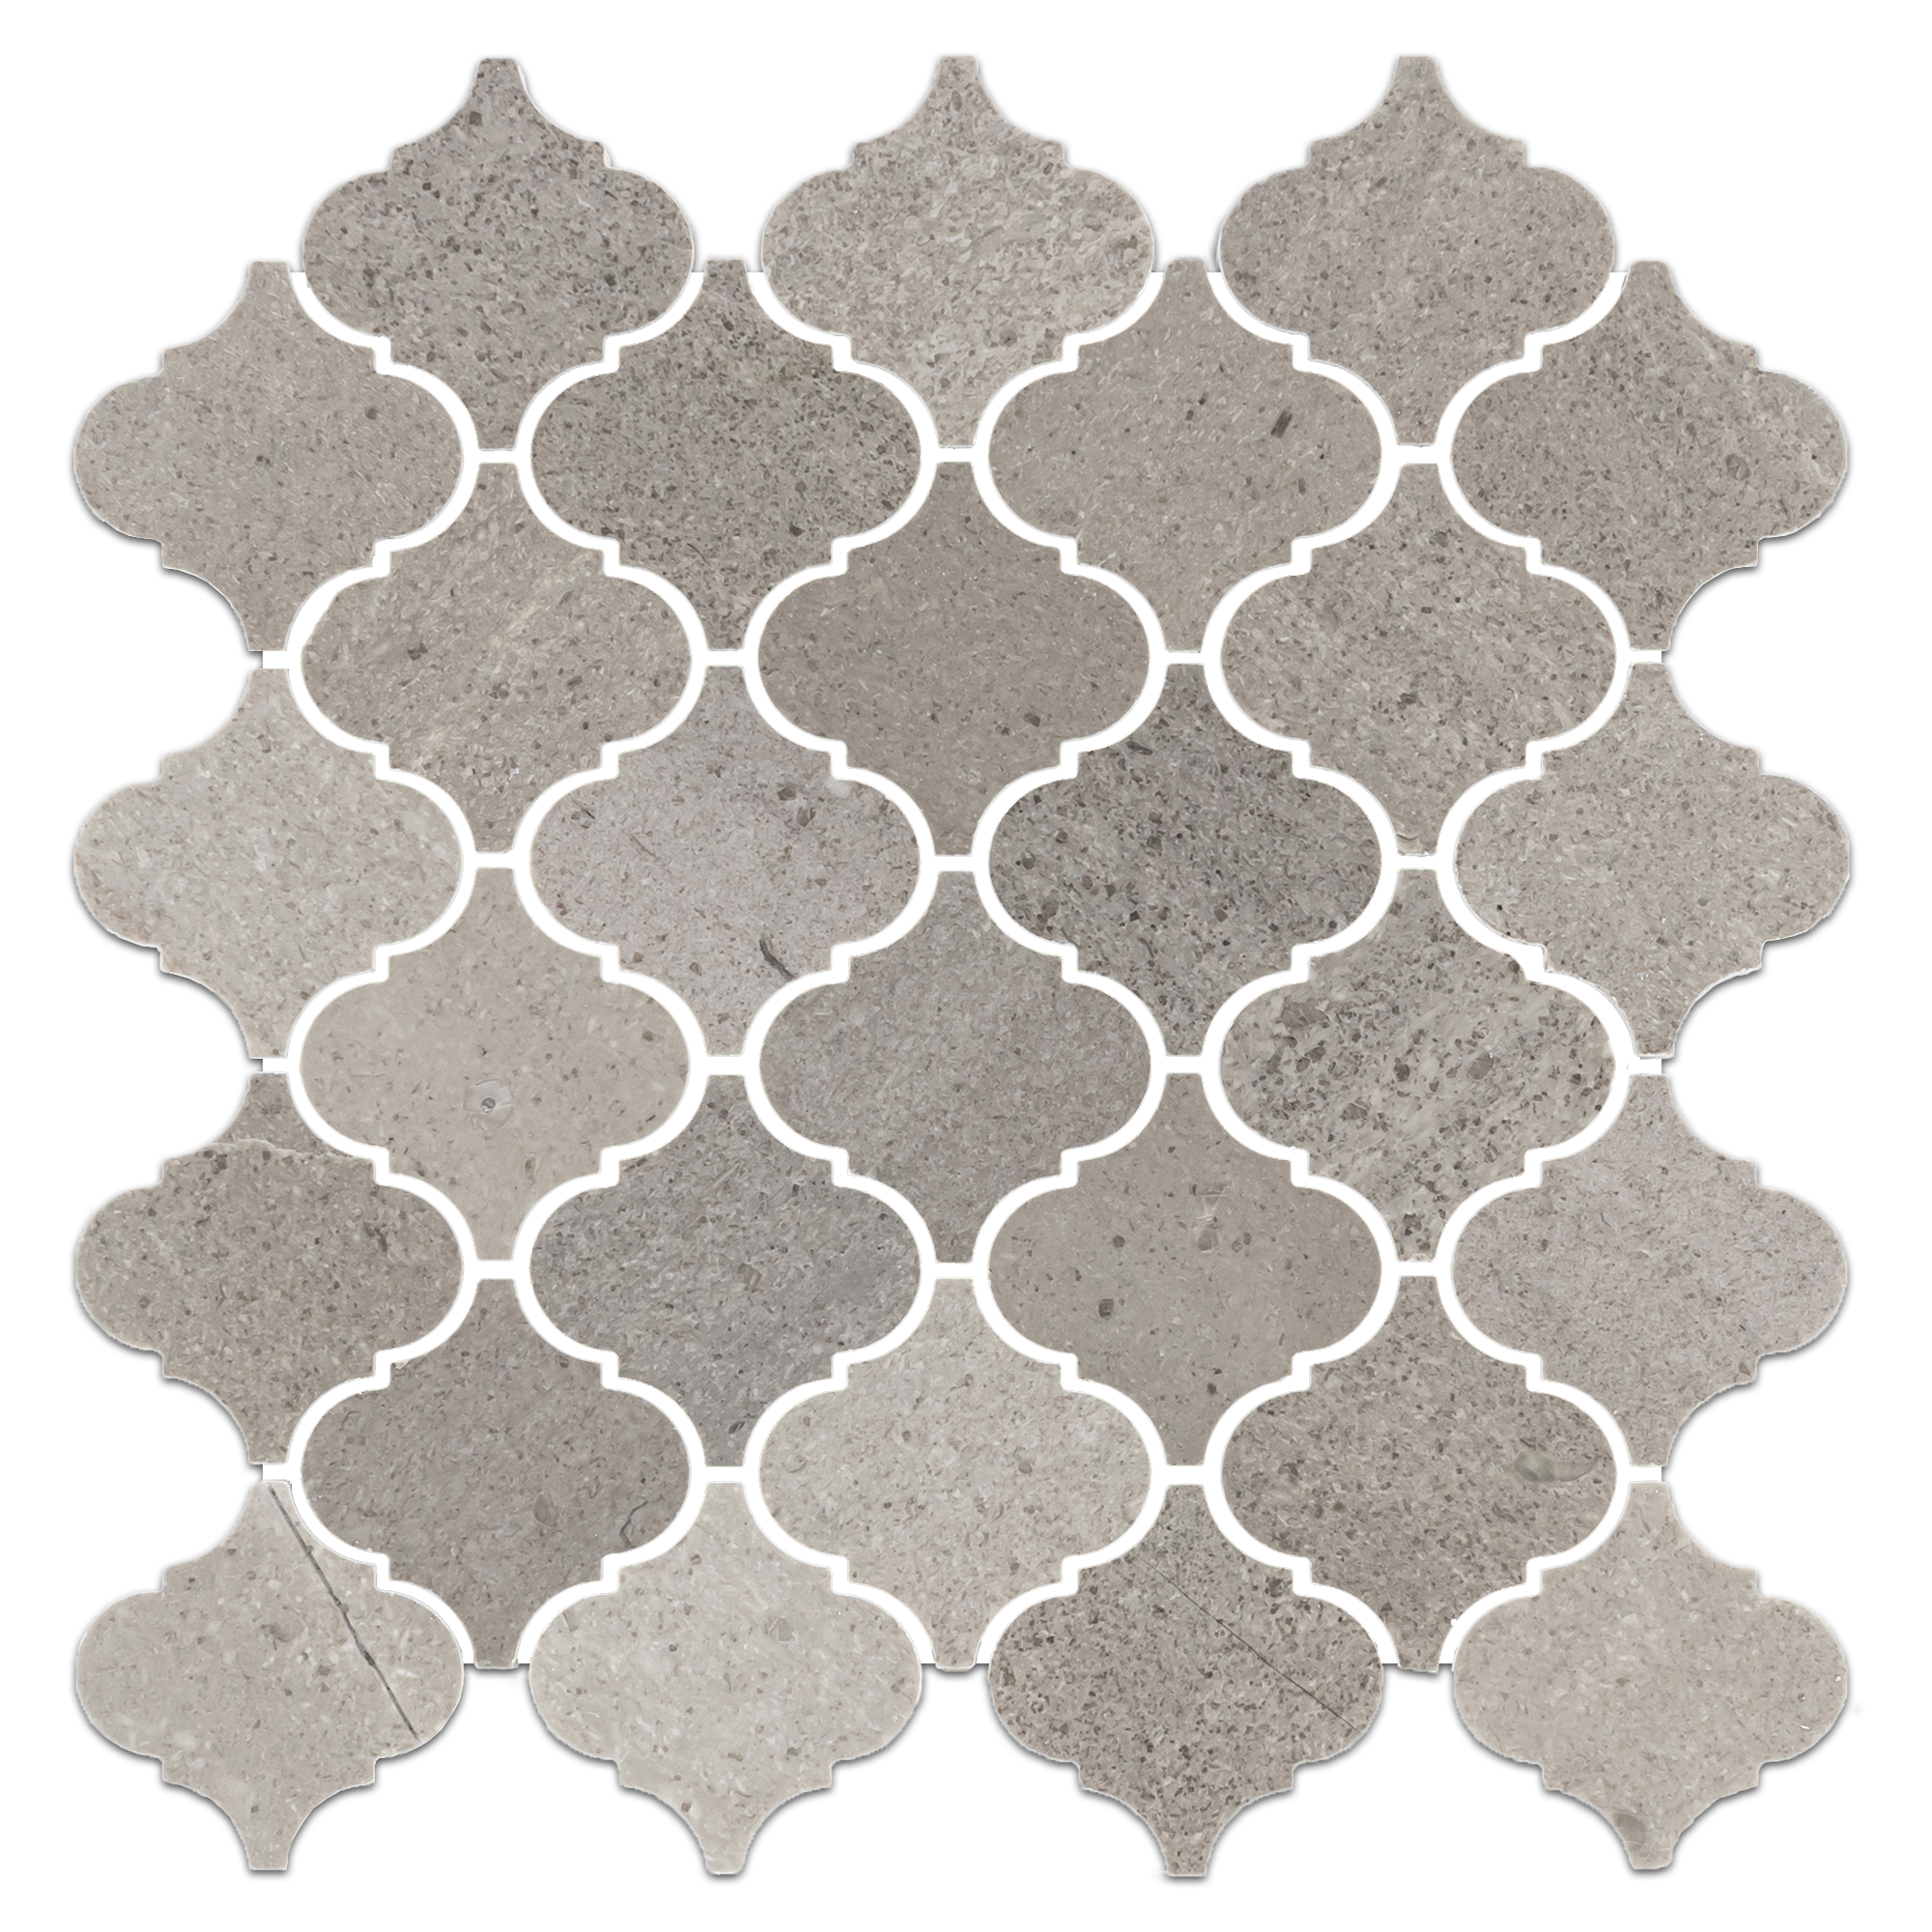 Elon Sand Dollar Marble 3 Lantern Field Mosaic 12x12 Tile - Polished Finish - Surface Group International Product